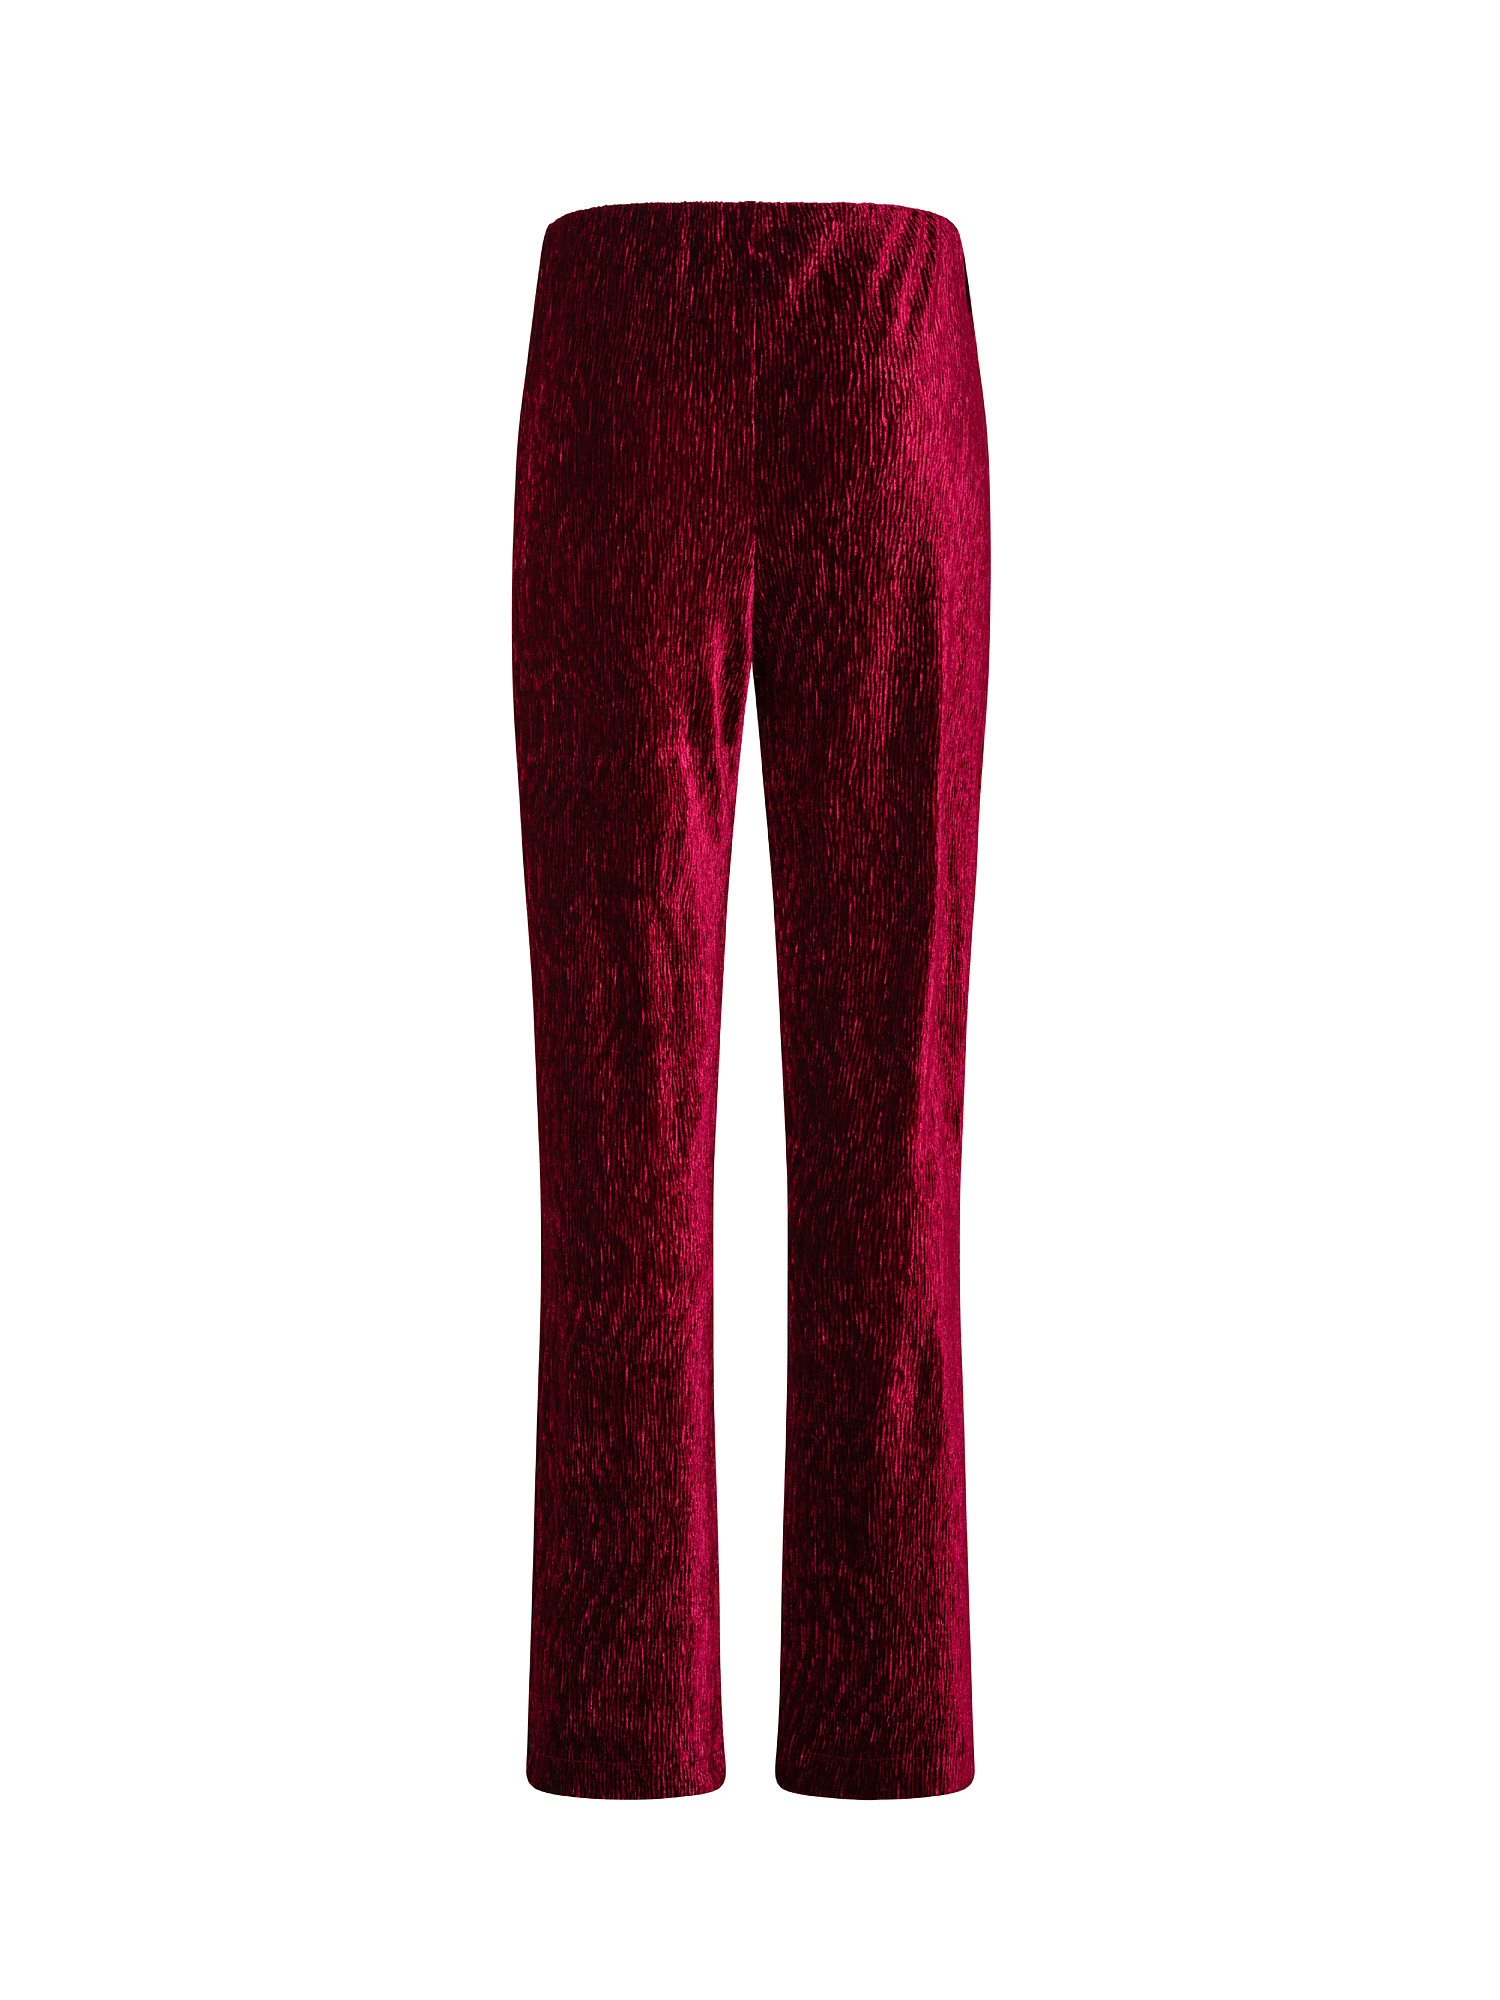 Pantalone elegante, Rosso, large